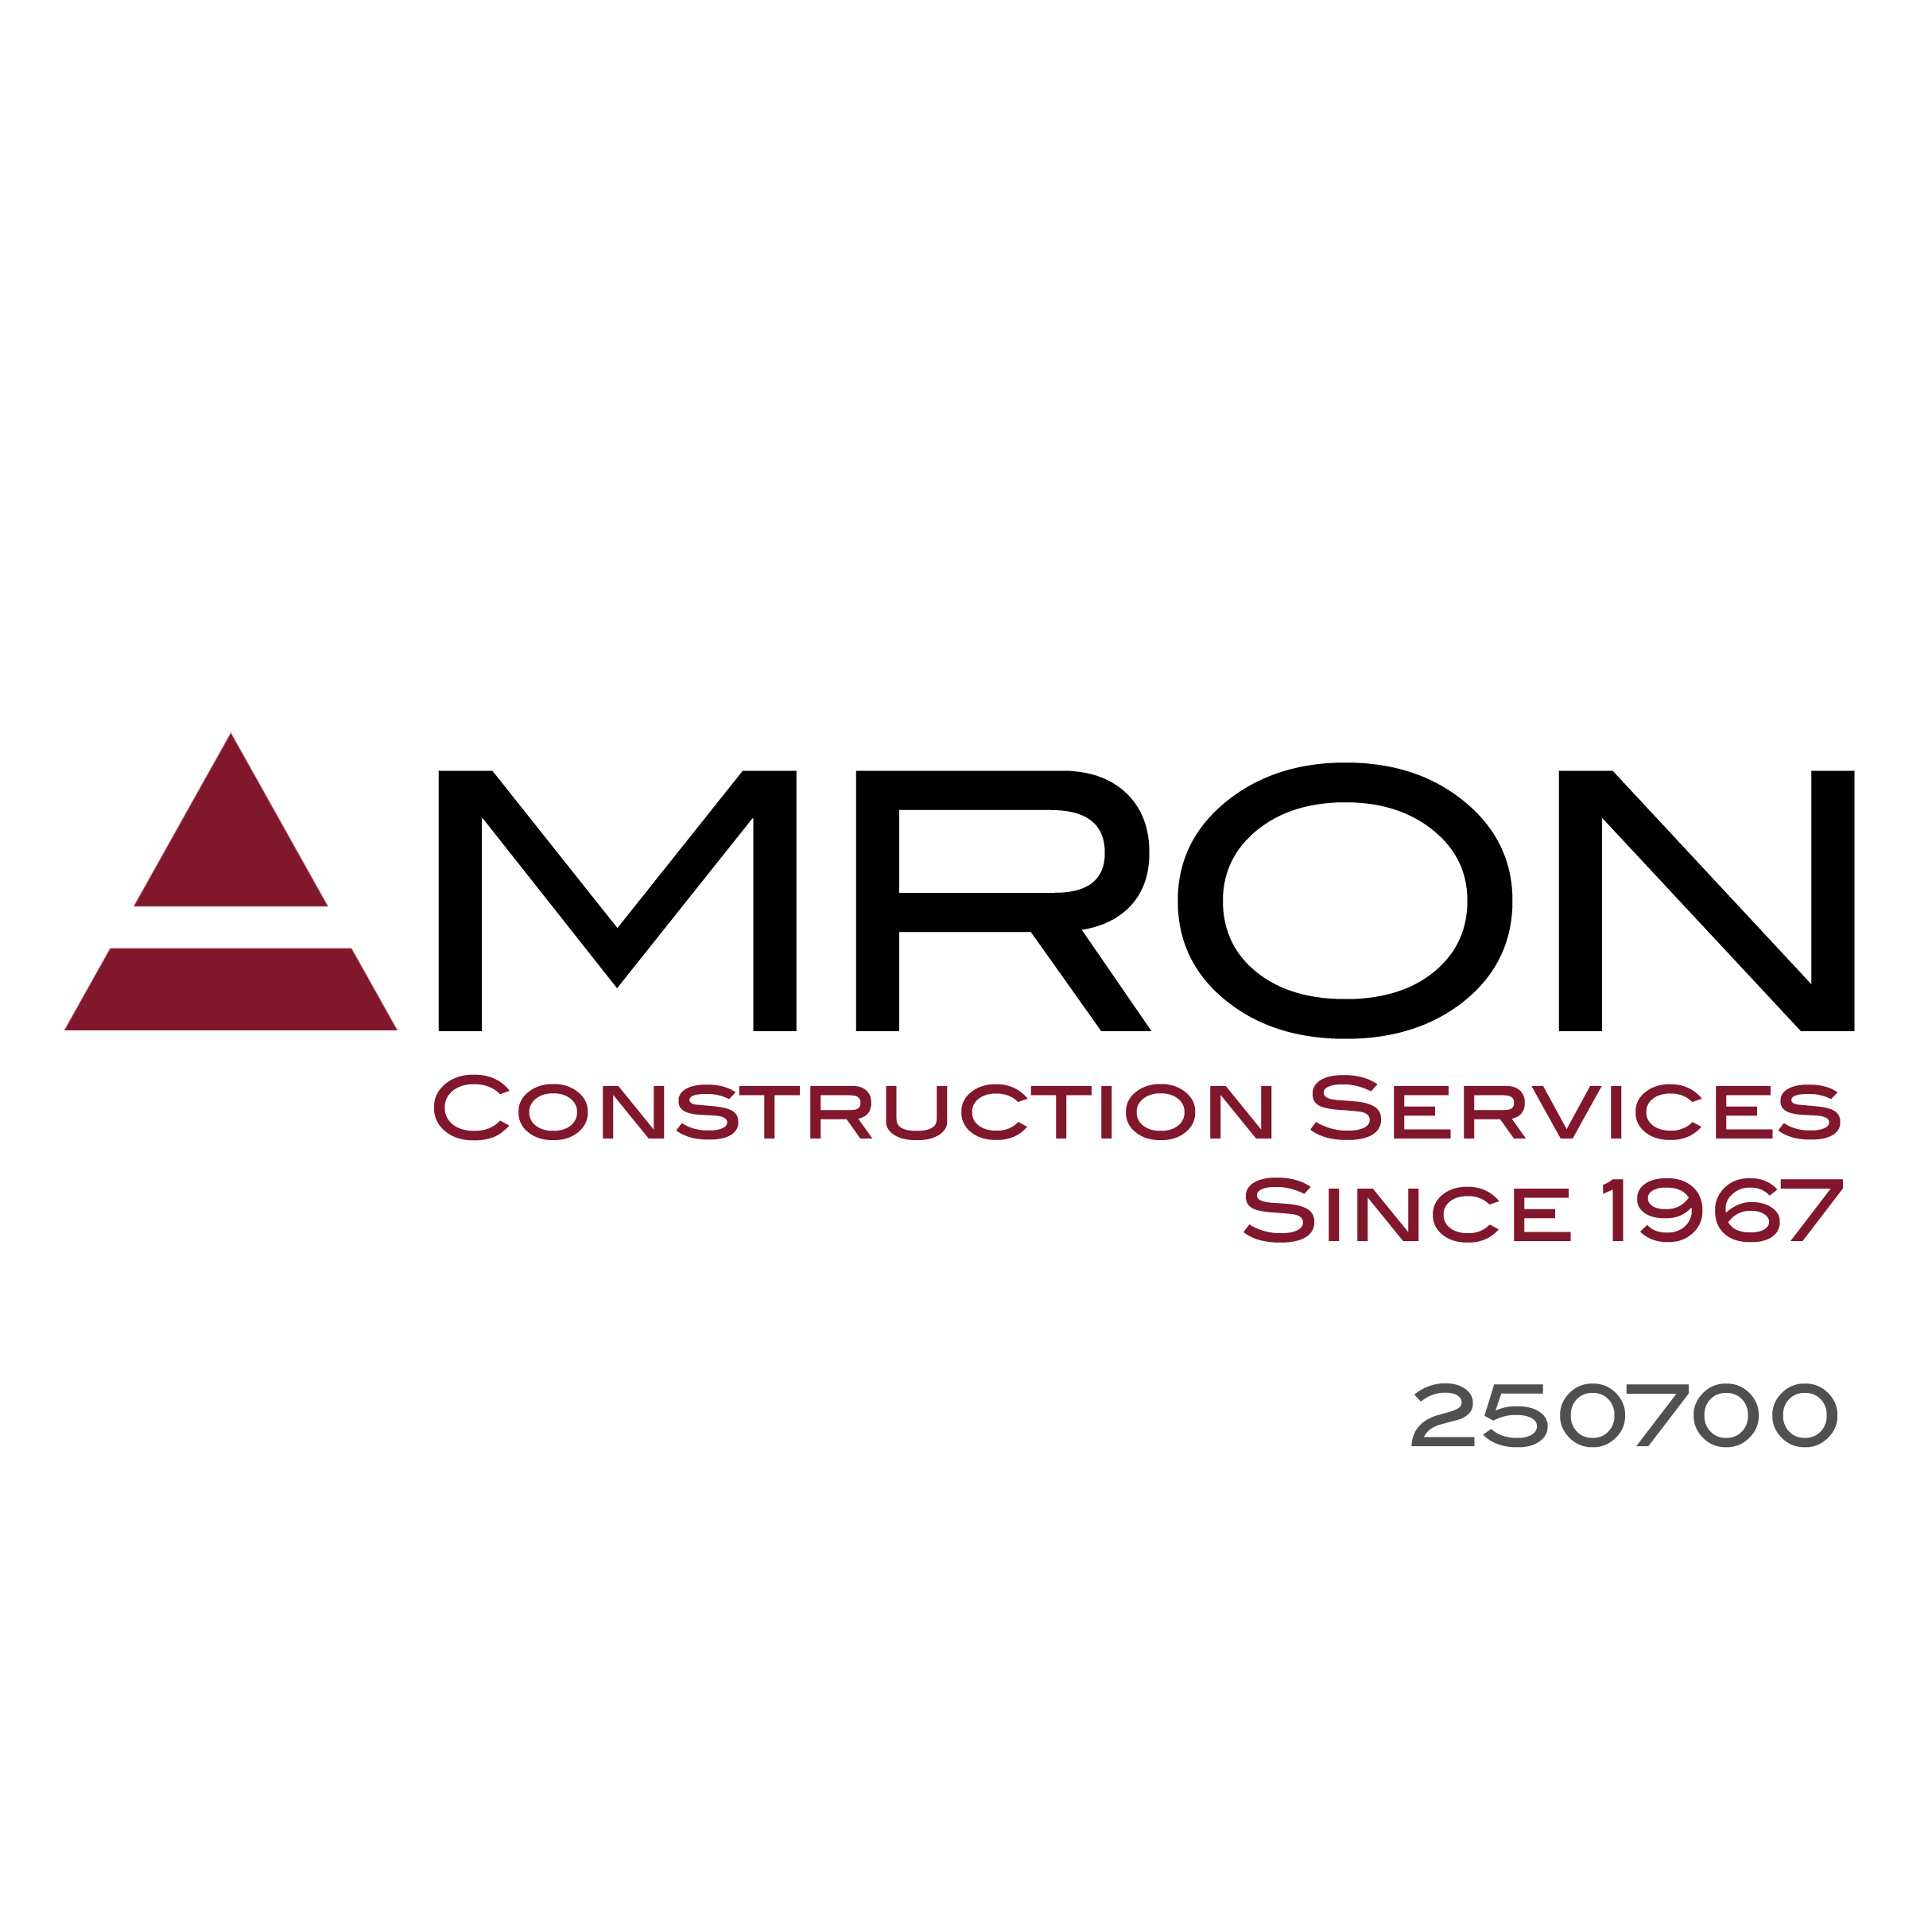 AMRON Logo